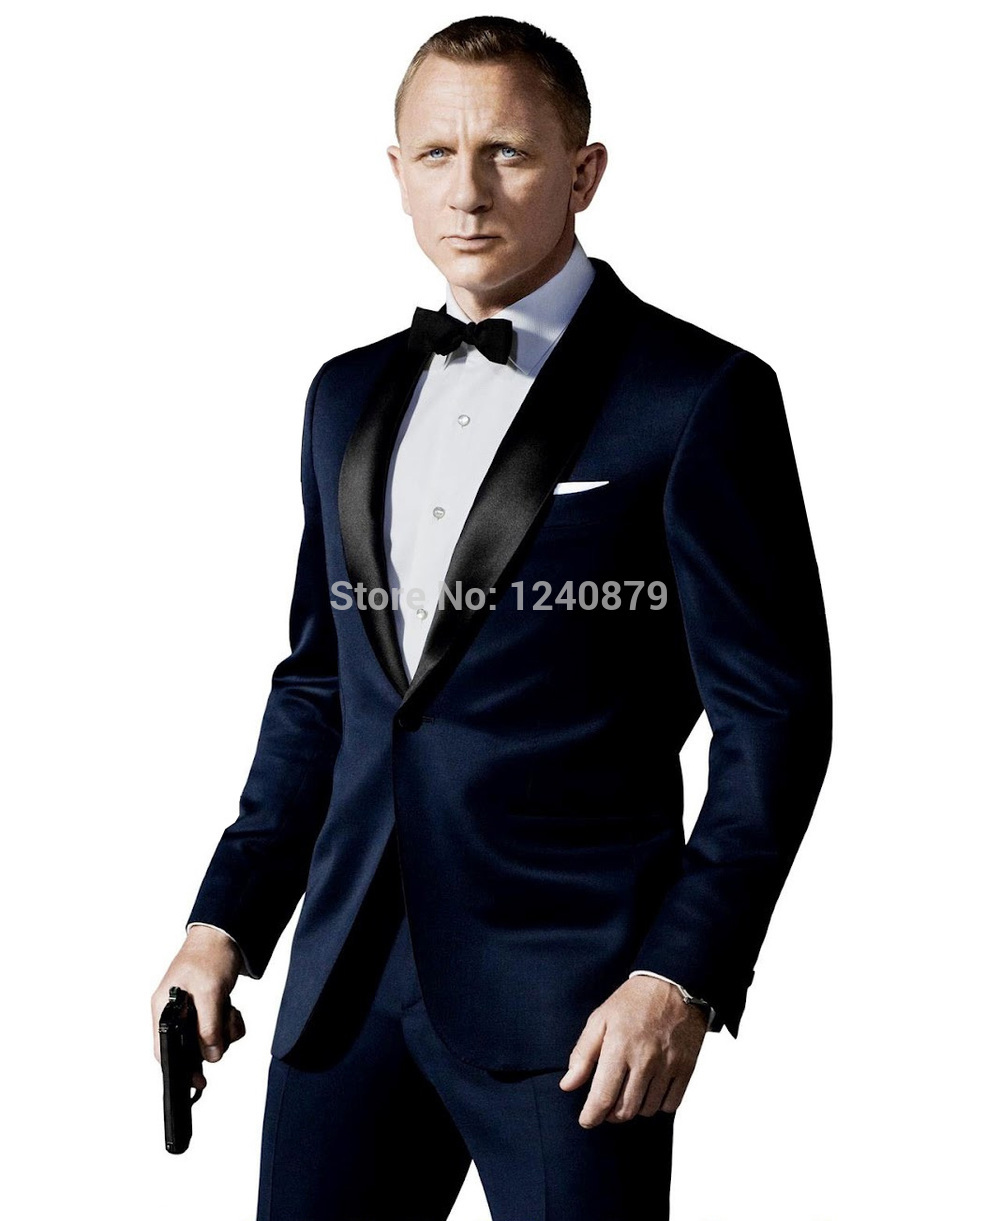 Custom Made Dark Blue Tuxedo Inspired By Suit Worn In James Bond Wedding Suit For Men Groom Jacket Pants Bow black